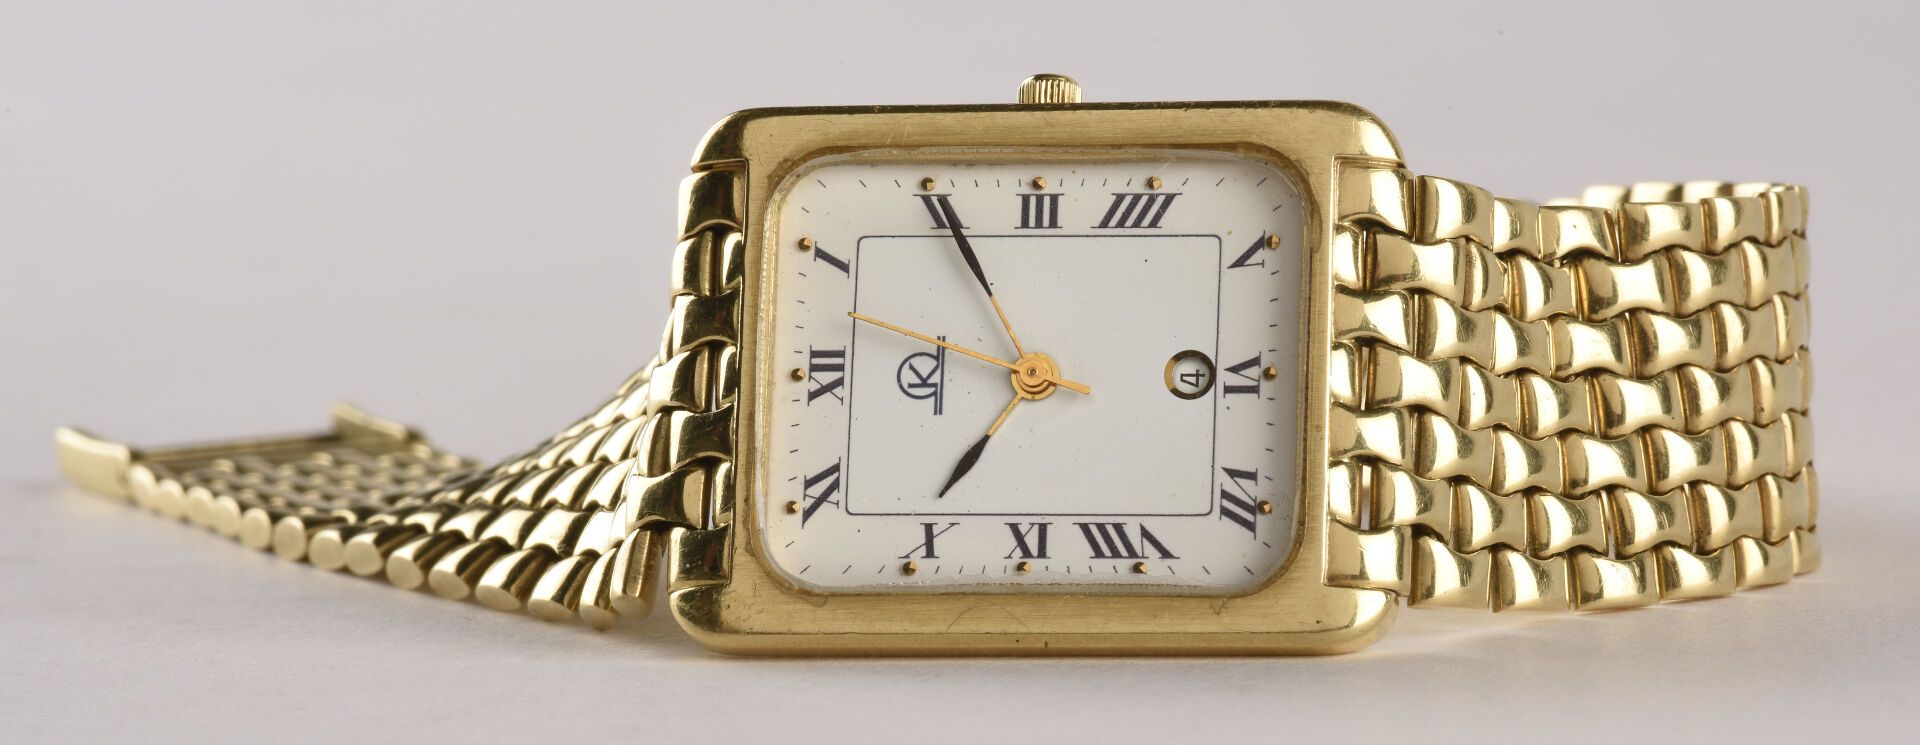 KODY, vers 1980. Montre bracelet en or jaune 18k, boitier rectangulaire , lunett&hellip;